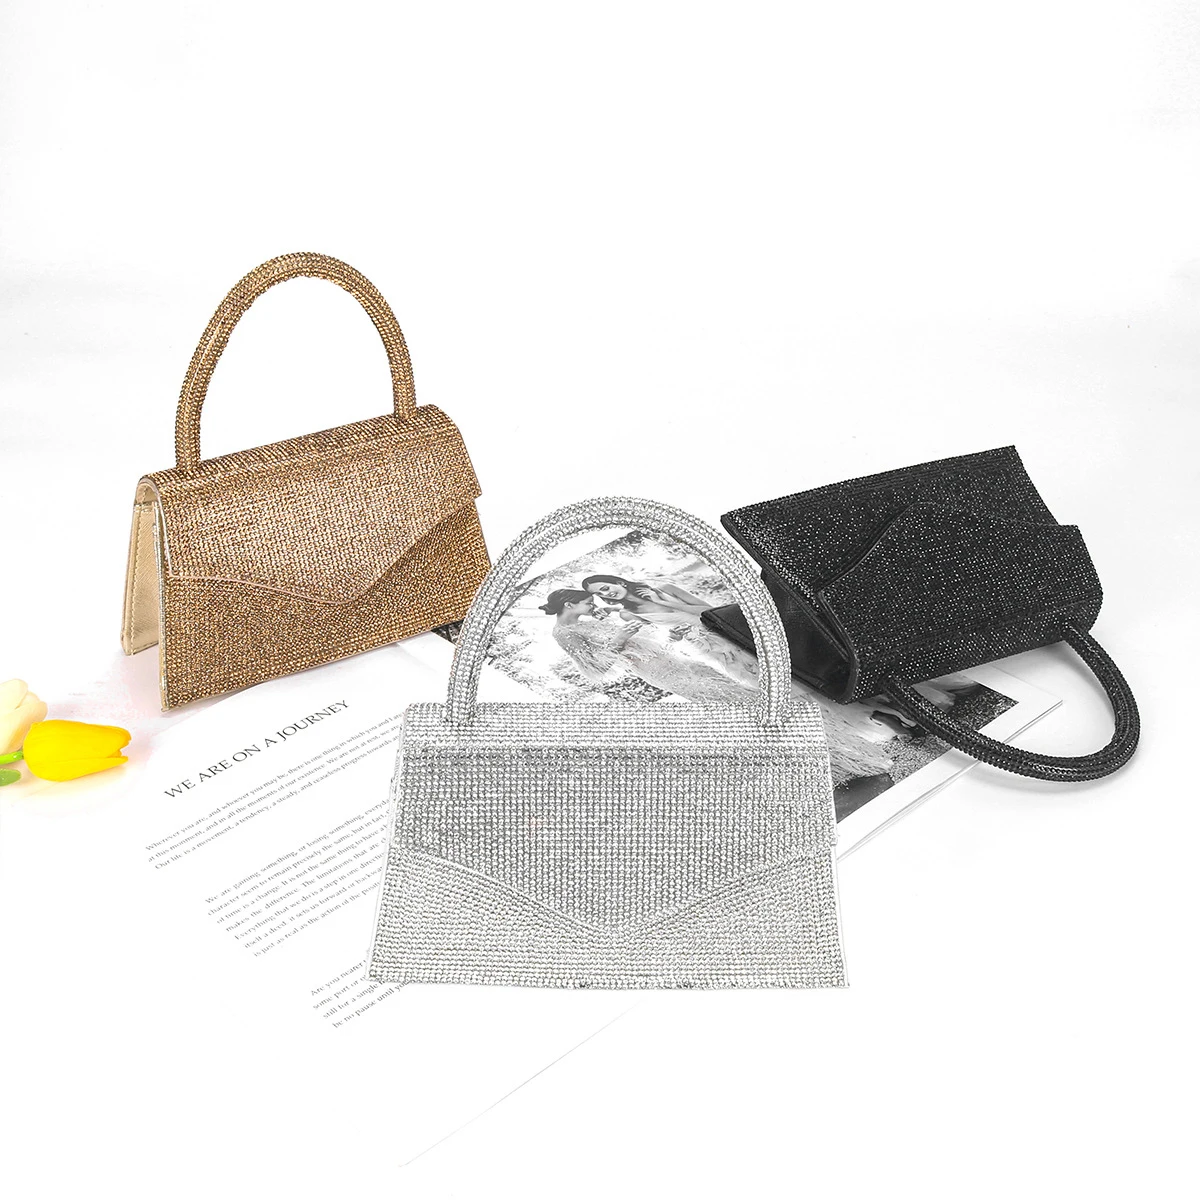 Luxury Designer Clutch Bags USA